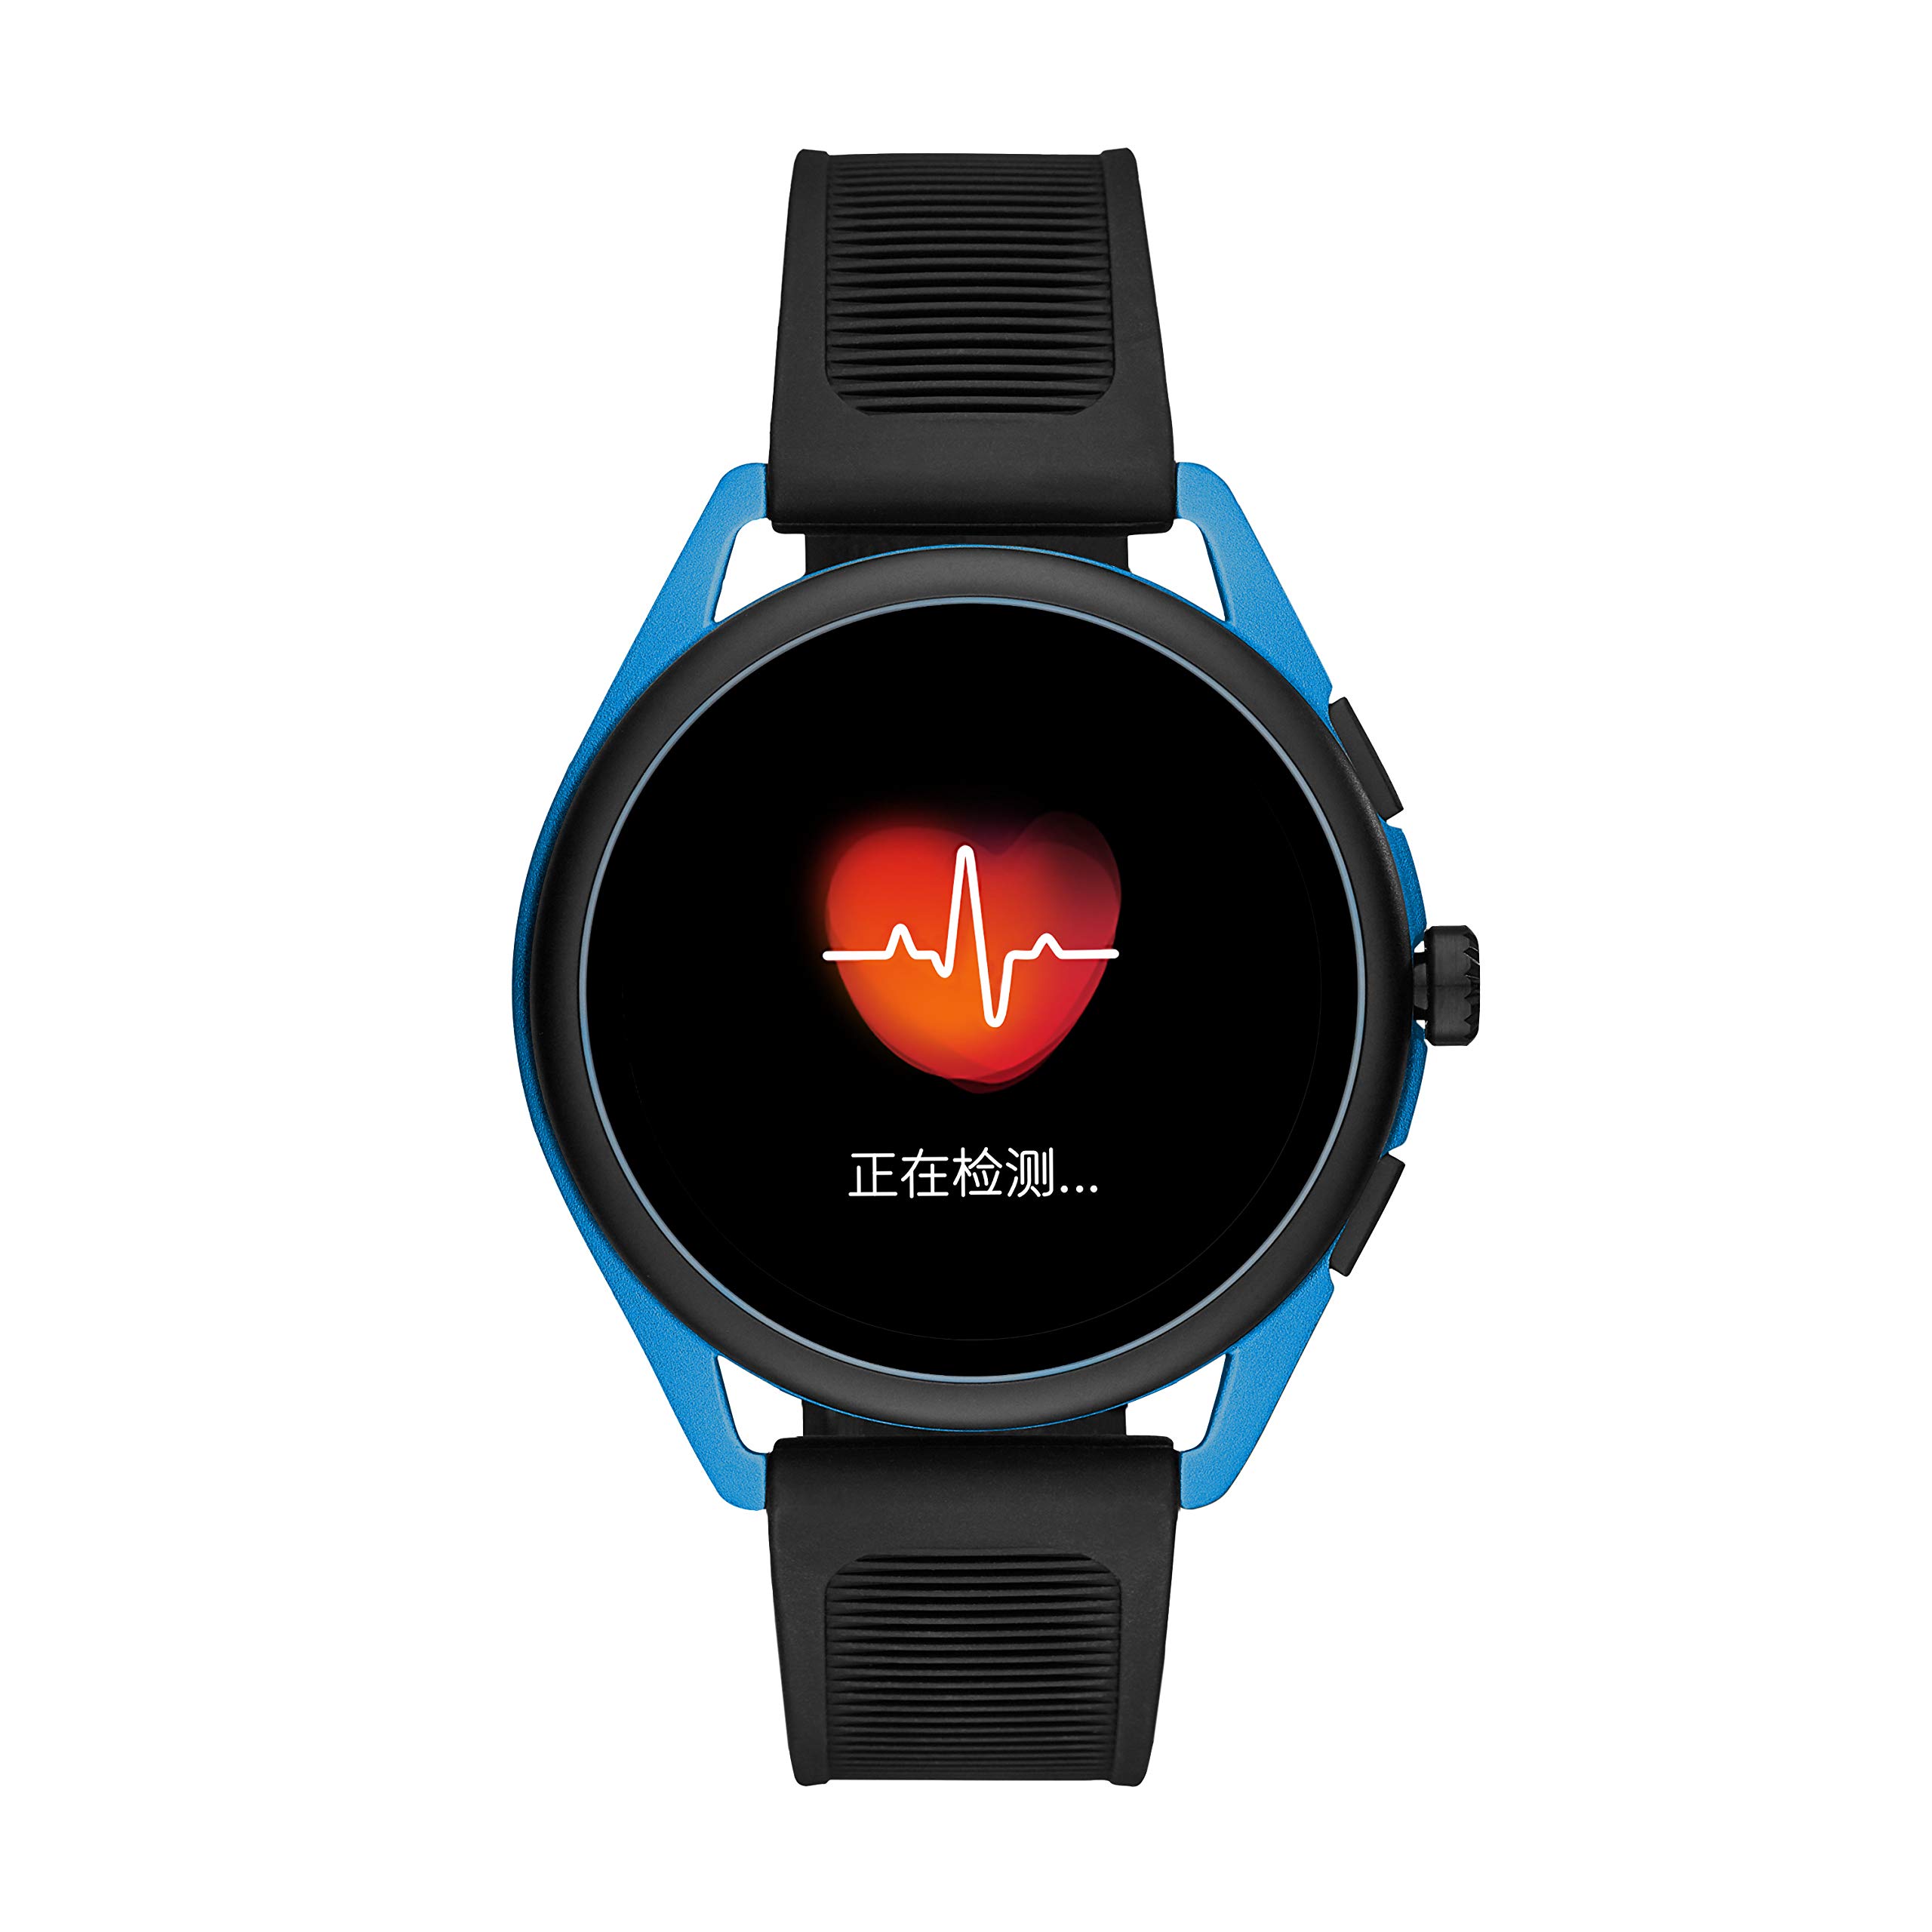 Emporio Armani Men's Smartwatch 3 Touchscreen Aluminum and Rubber Smartwatch, Black and Blue-ART5024